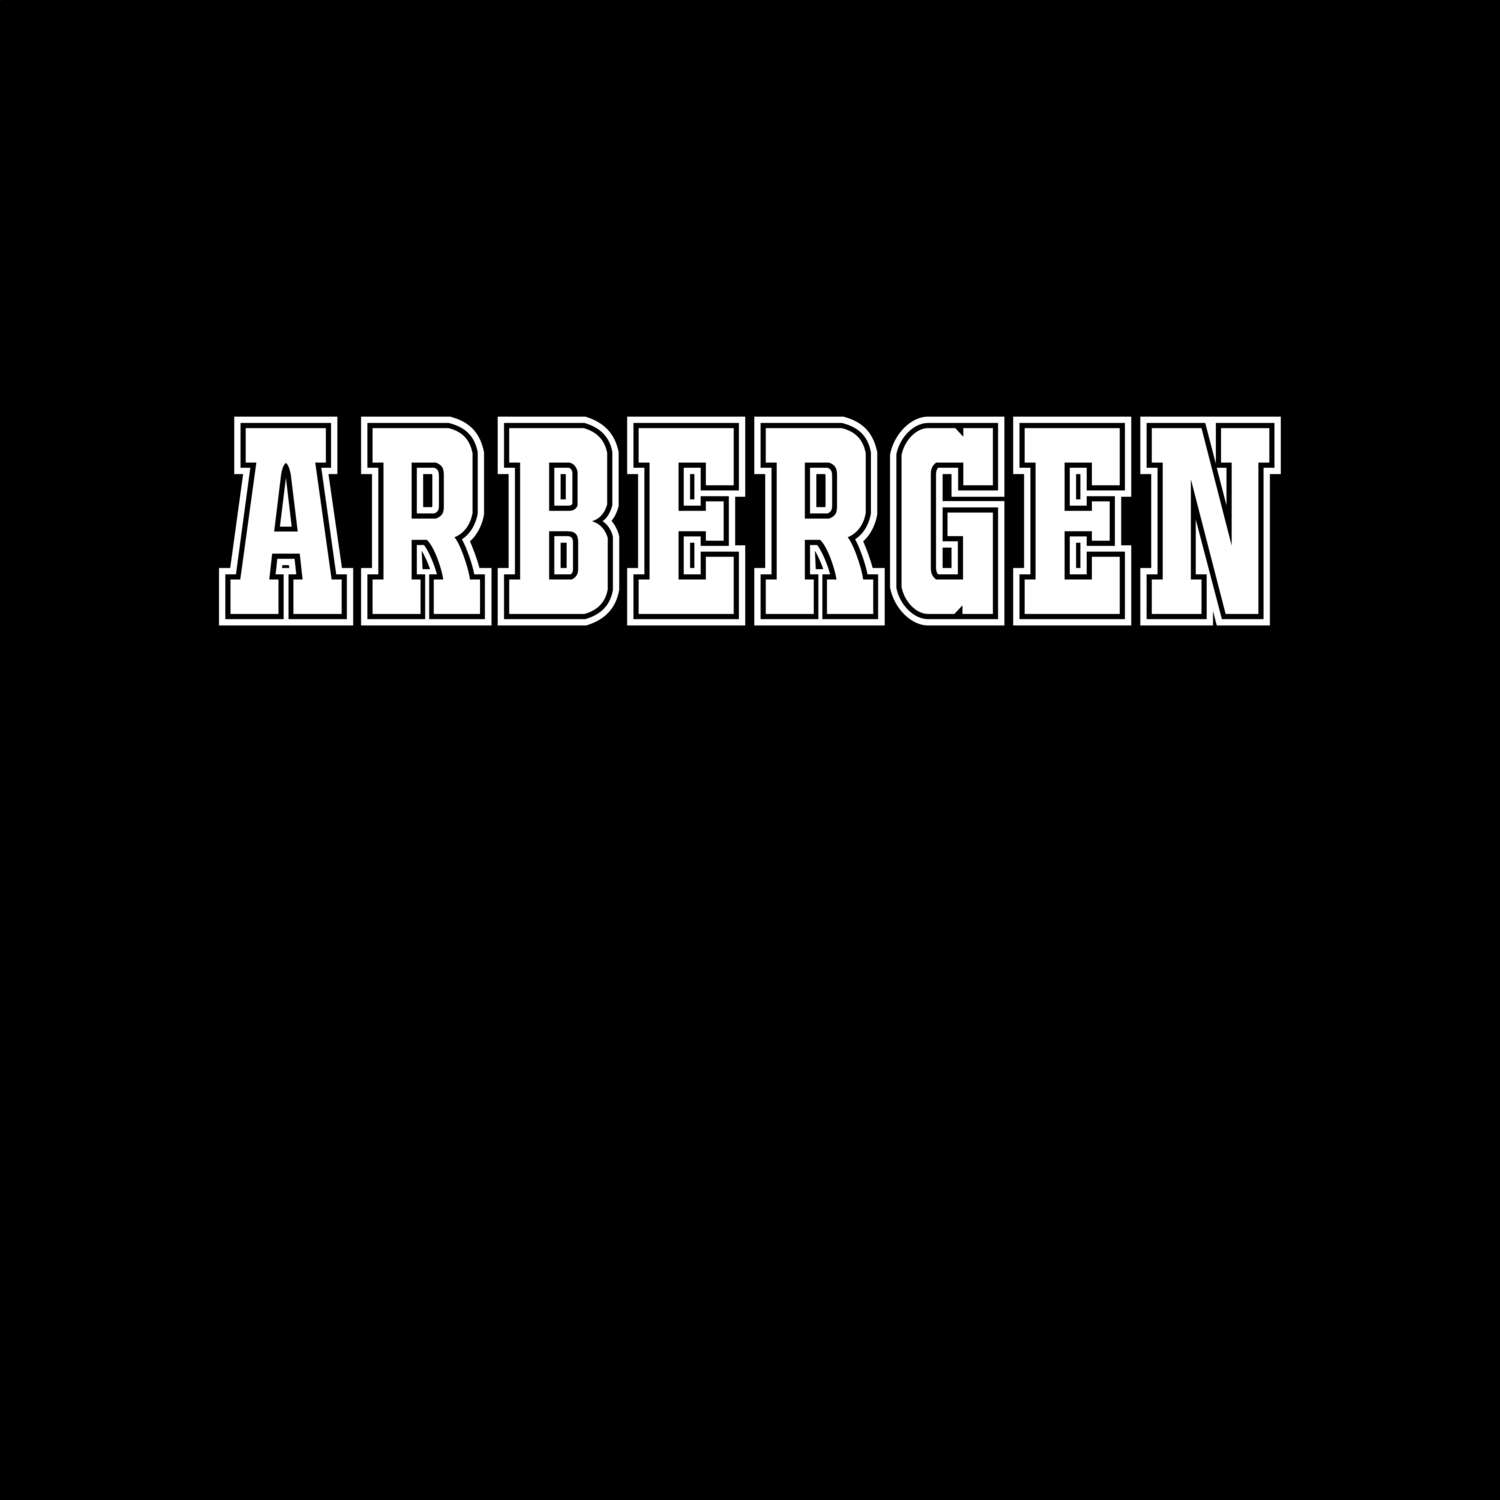 Arbergen T-Shirt »Classic«